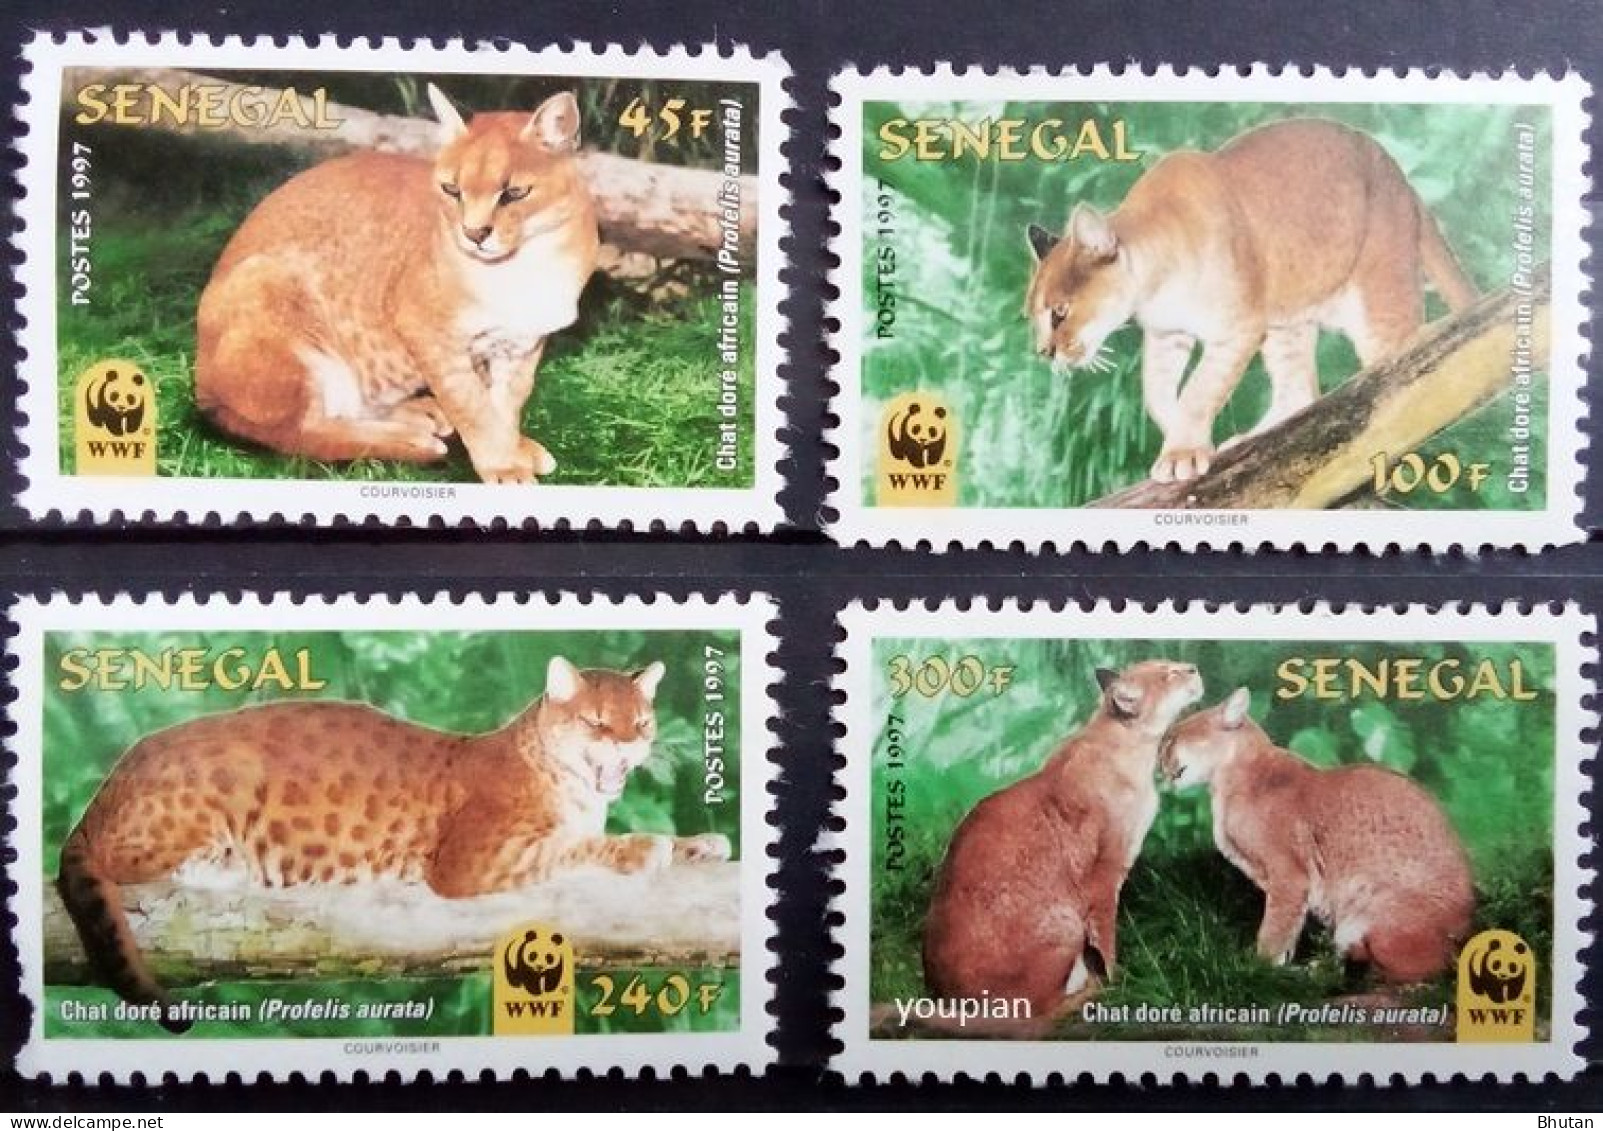 Senegal 1997, WWF - African Golden Cat, MNH Stamps Set - Senegal (1960-...)